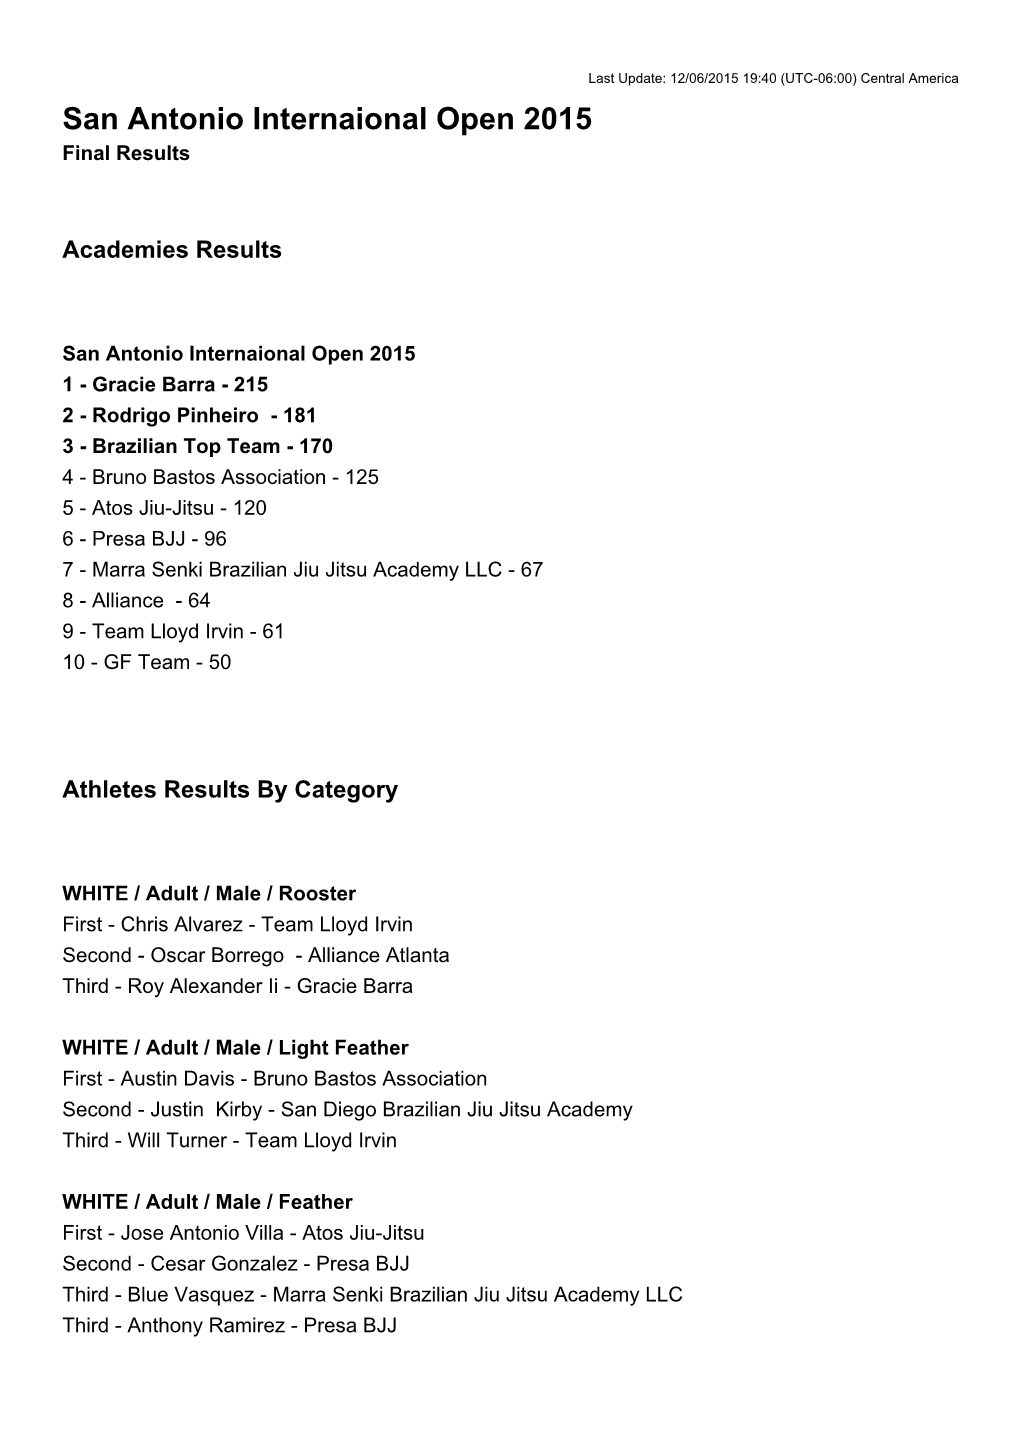 San Antonio Internaional Open 2015 Final Results